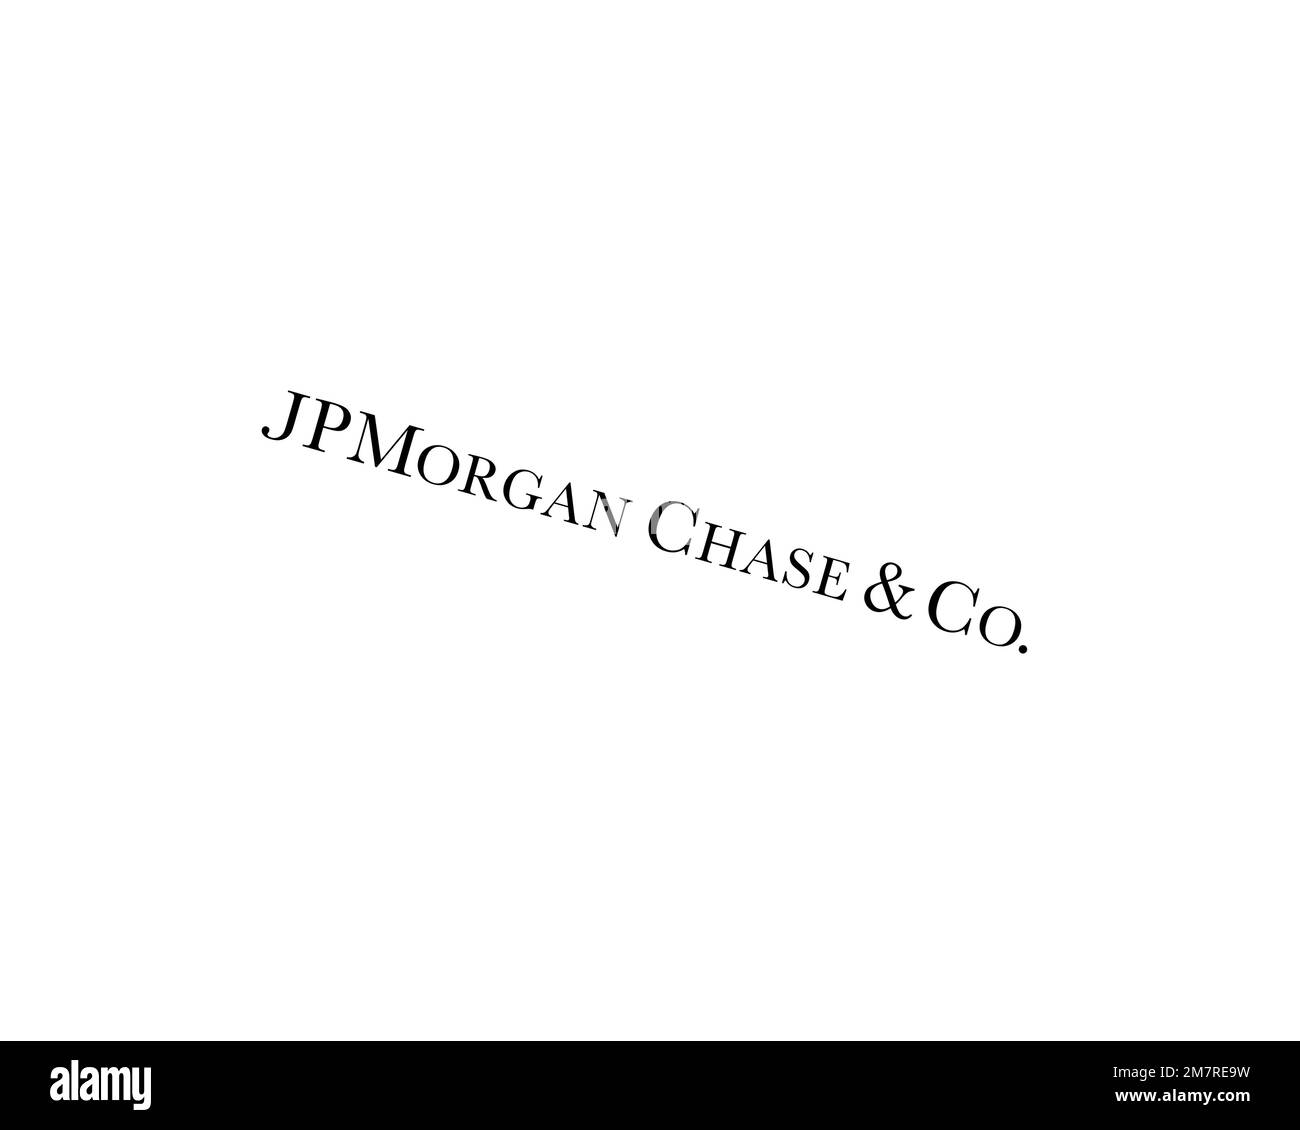 JPMorgan Chase, rotated logo, white background B Stock Photo